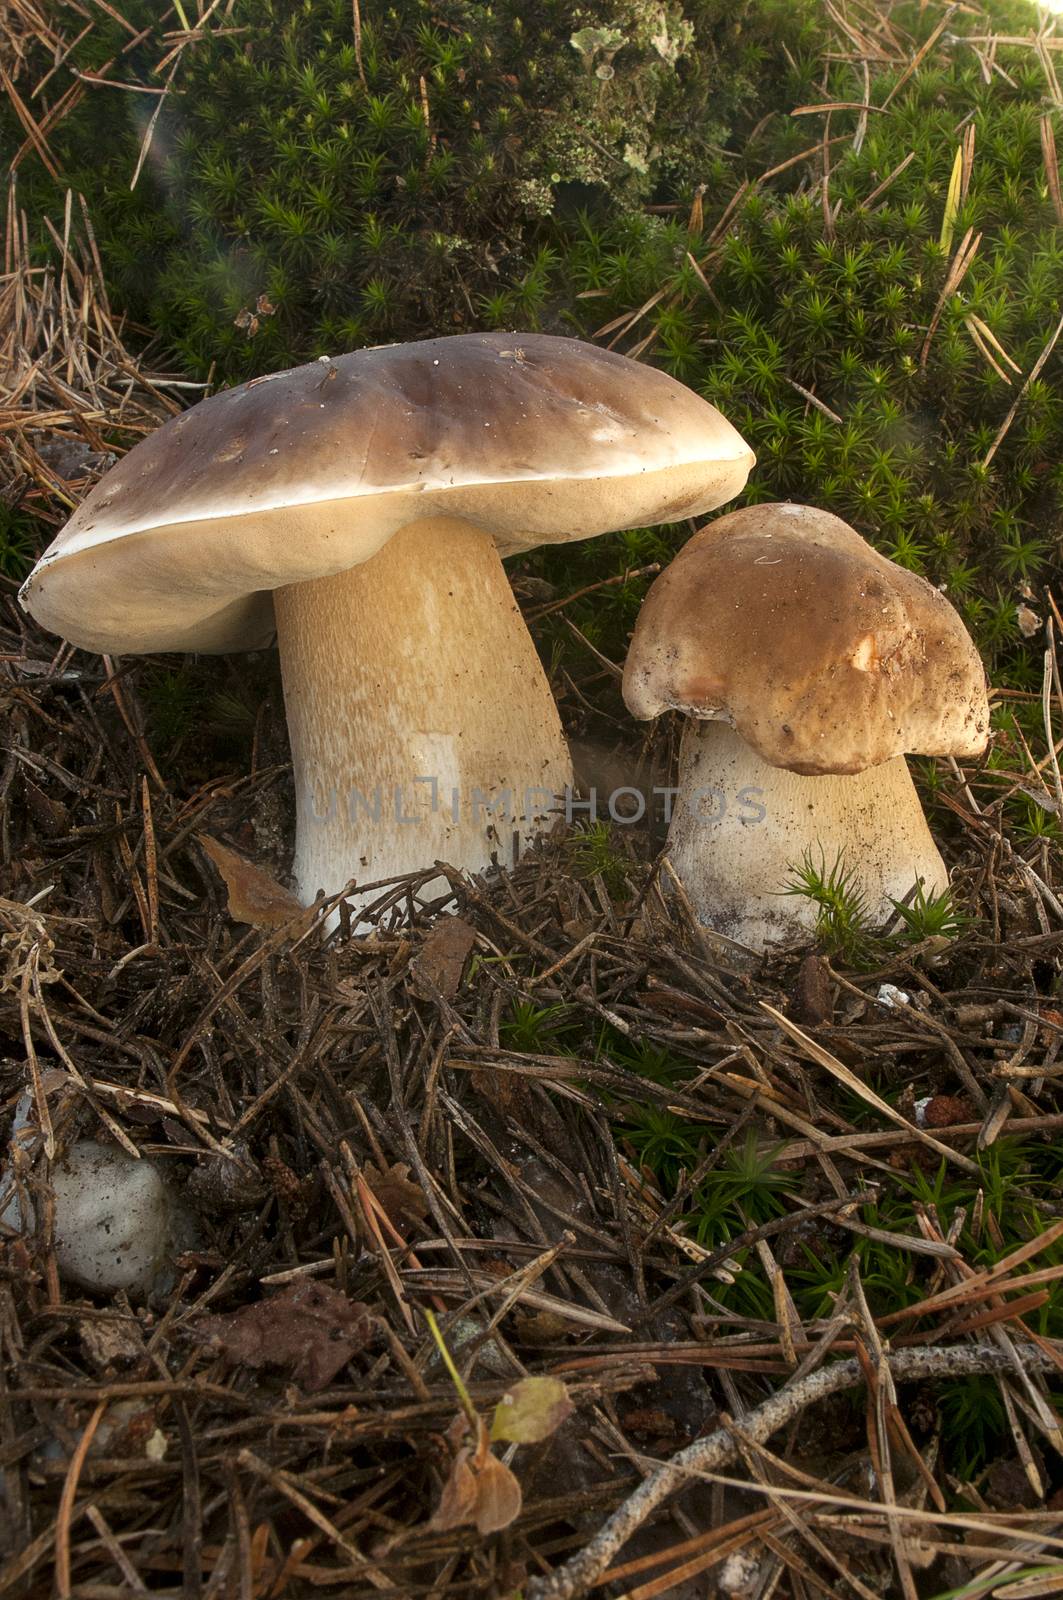 Mushroom, boletus edulis, in pine forest  by jalonsohu@gmail.com